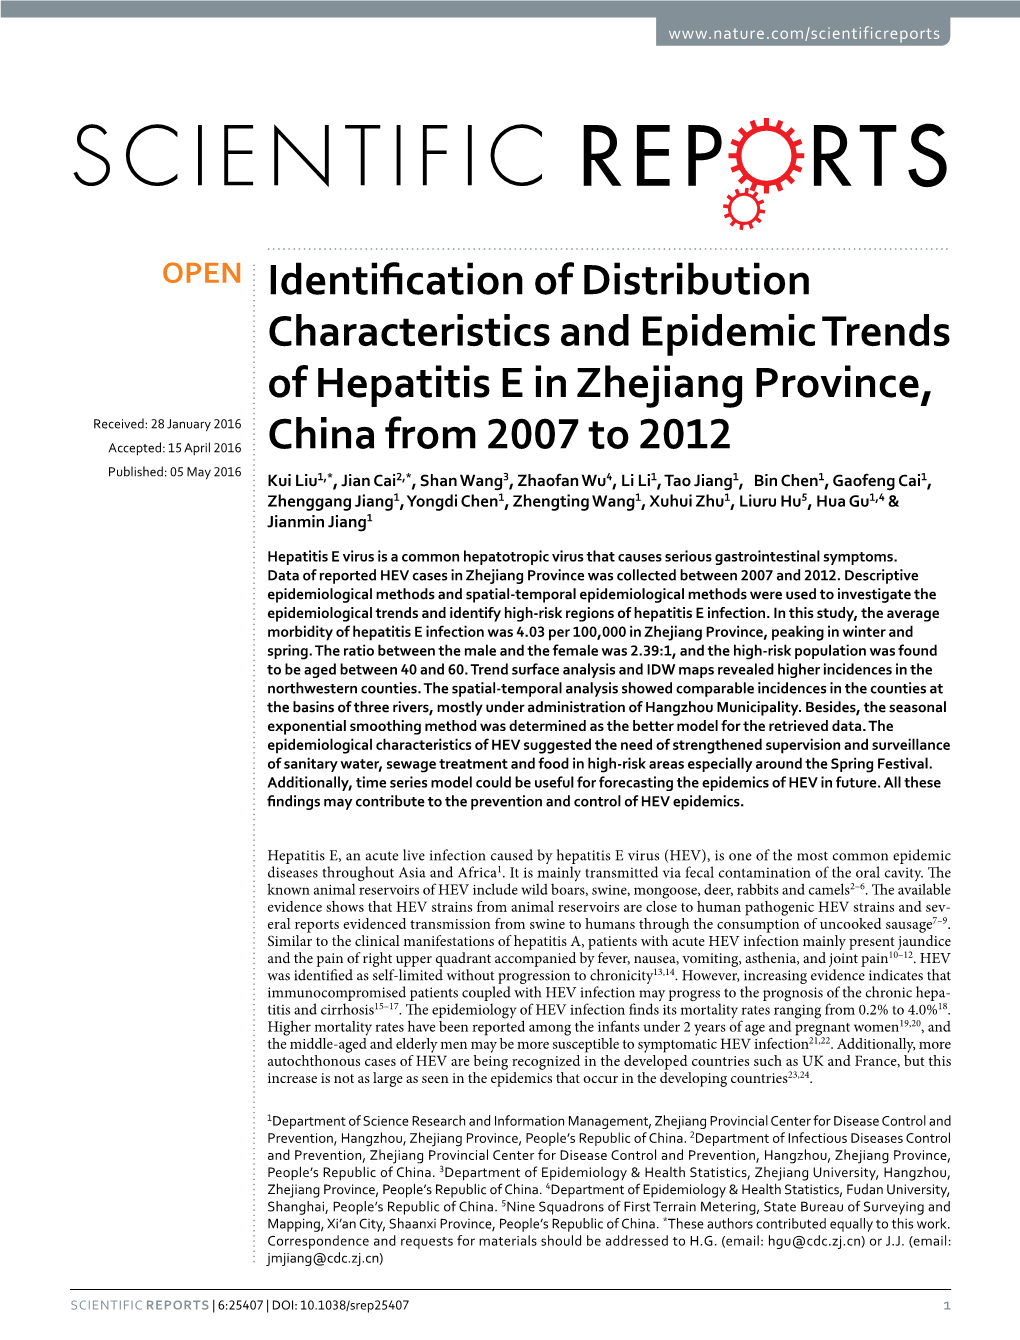 Identification of Distribution Characteristics and Epidemic